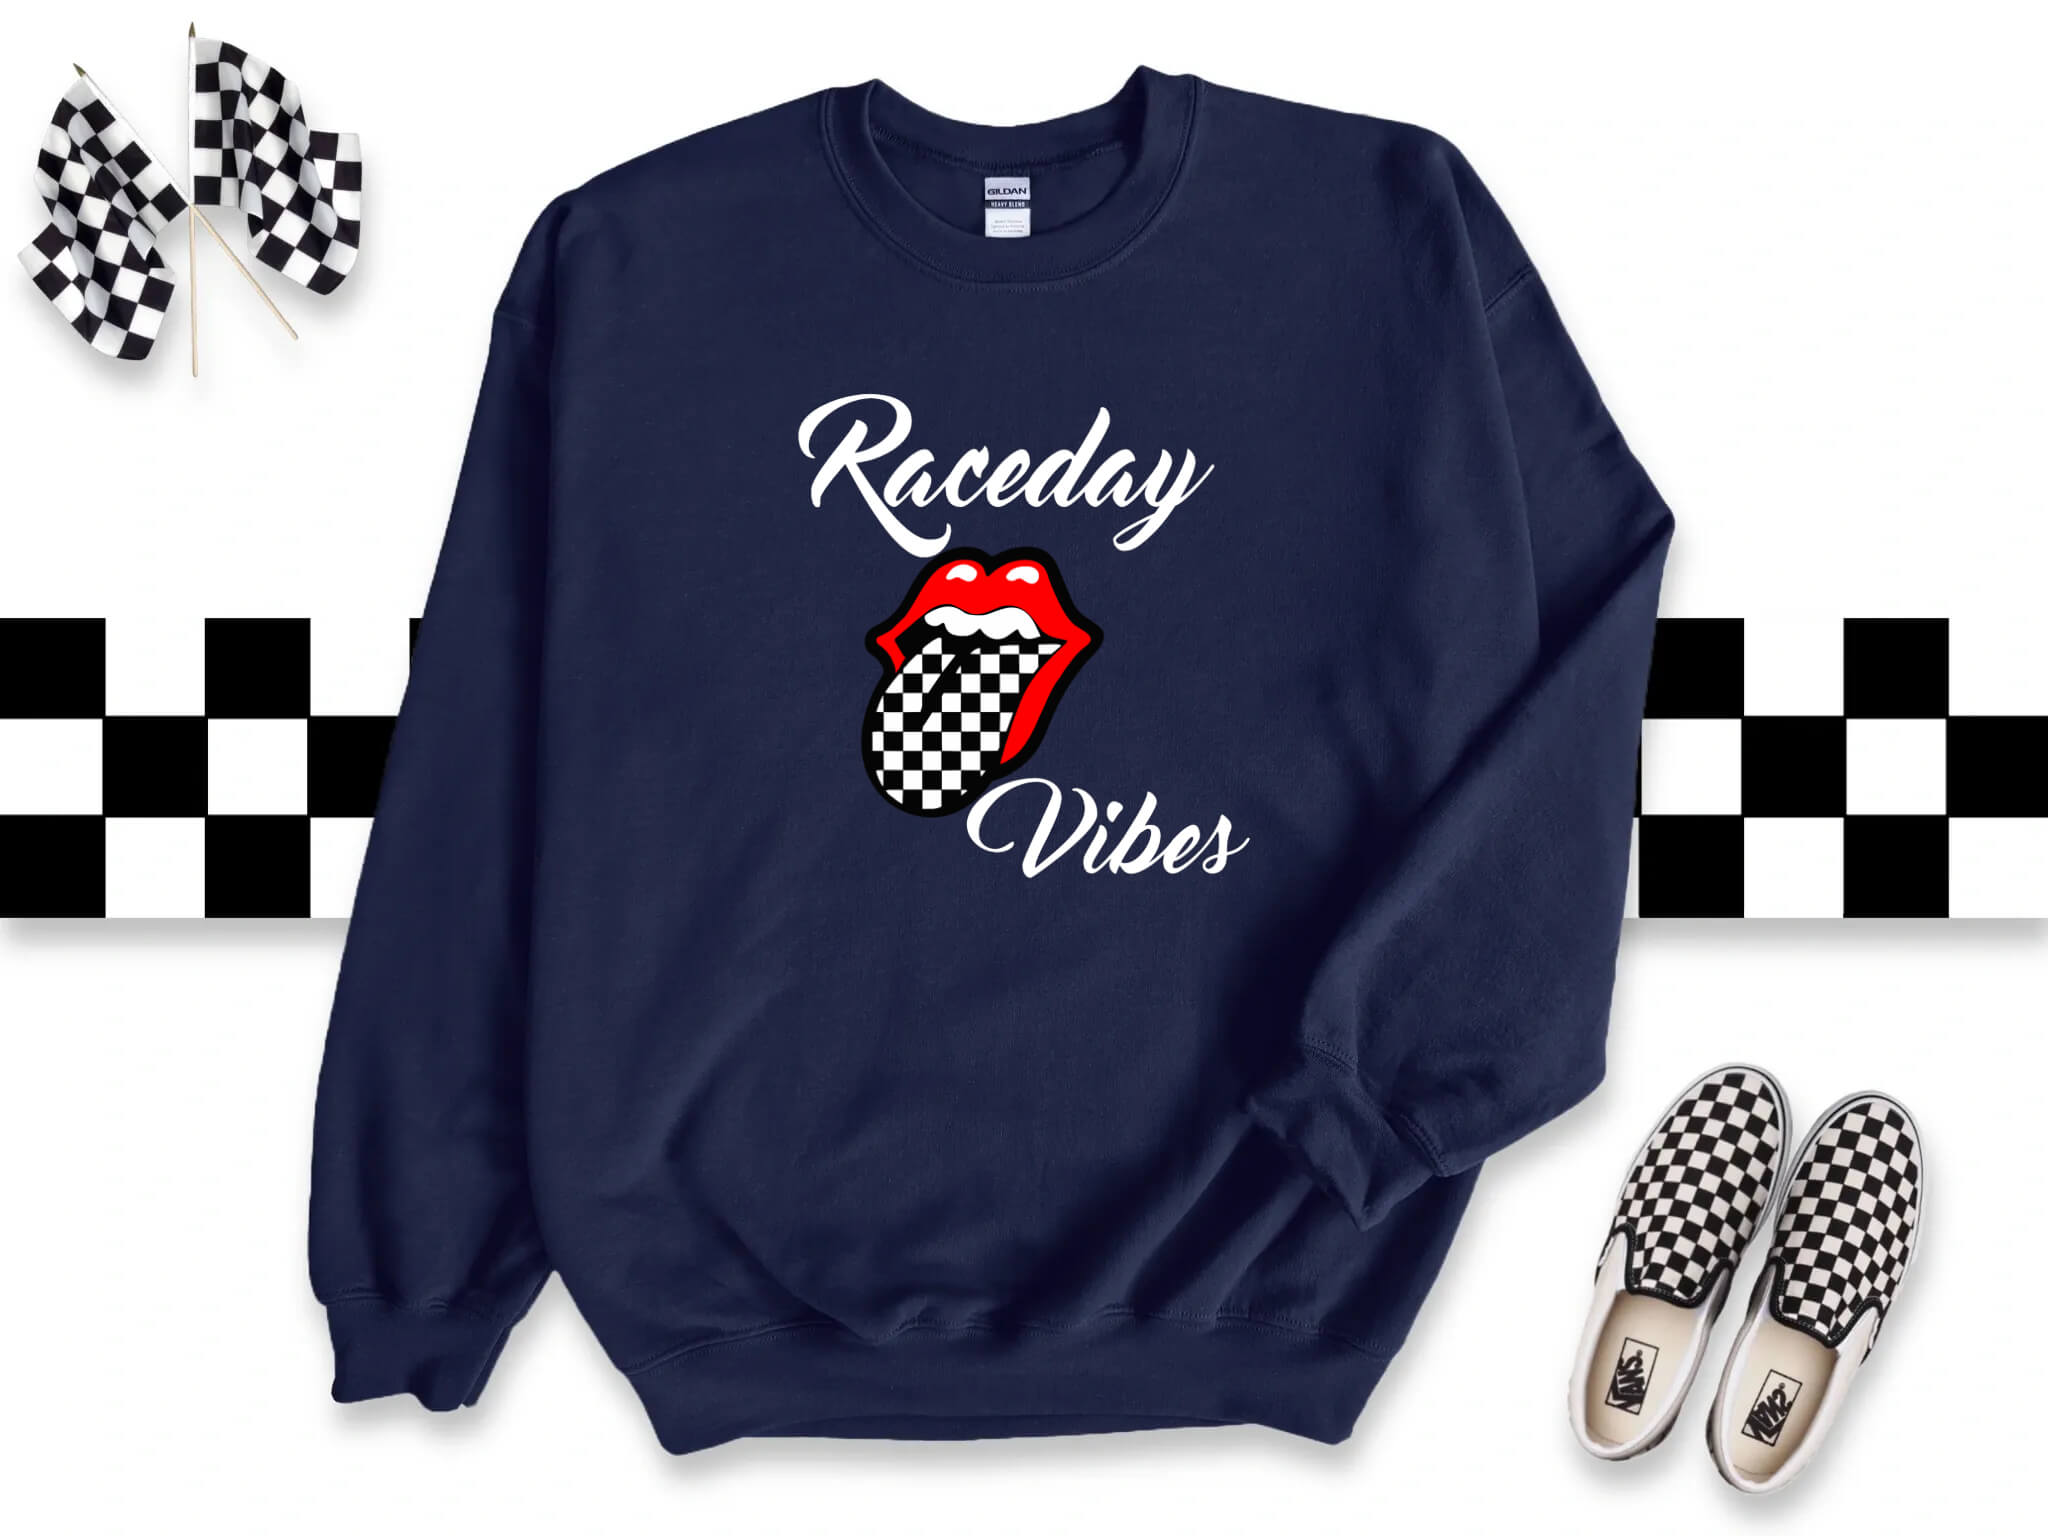 Racing - Raceday Vibes Women's Graphic Print Sweatshirt